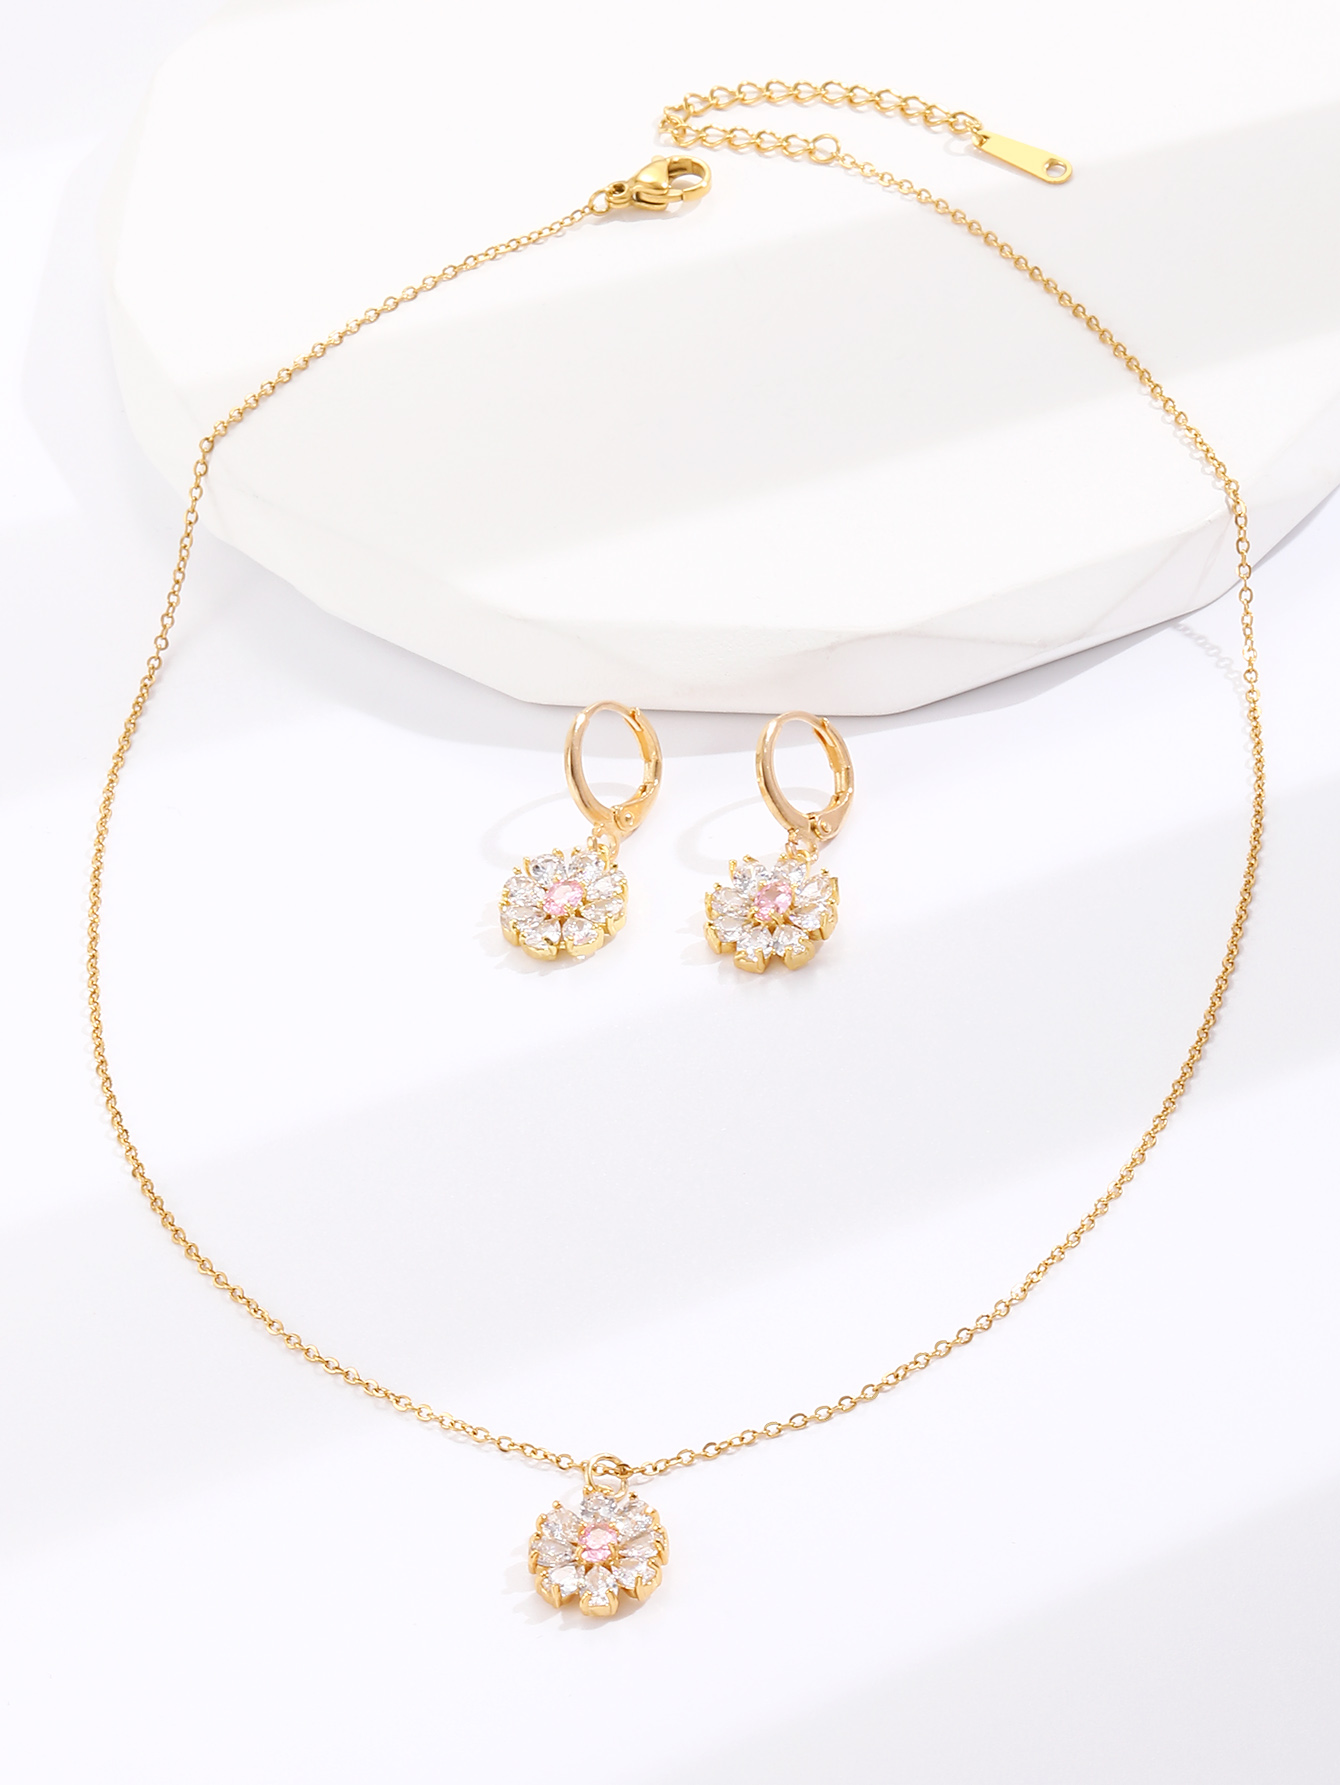 20 pcs - Flower Zircon Crystals Necklace and Huggies Earring Gold Tone 2 Pcs Jewellery Set - 10 Sets|GCJ385|UK SELLER